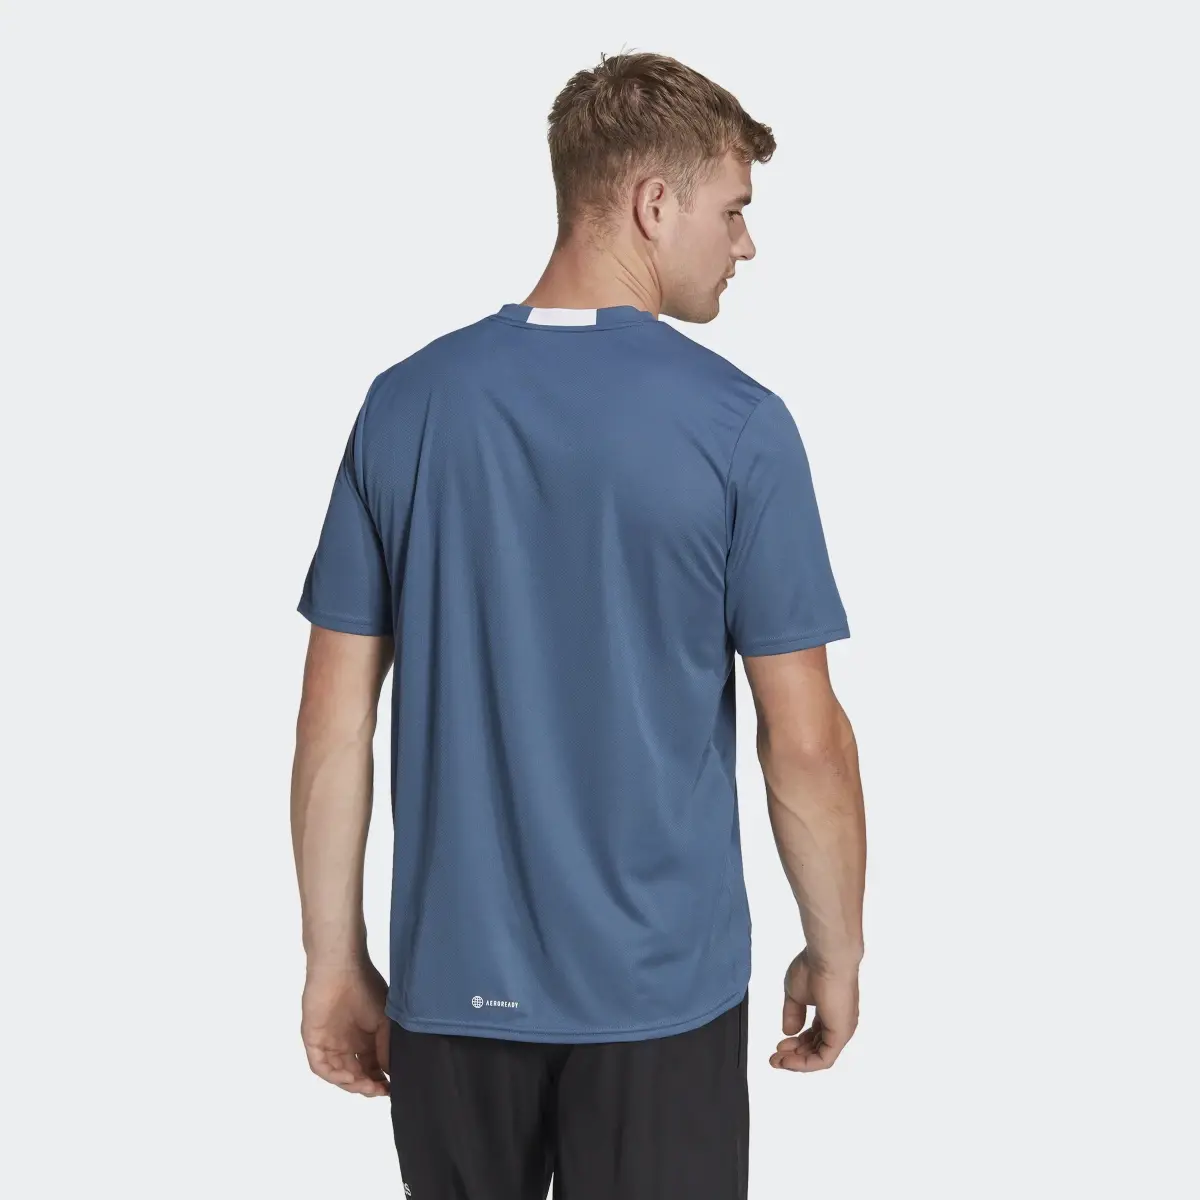 Adidas AEROREADY Designed for Movement T-Shirt. 3